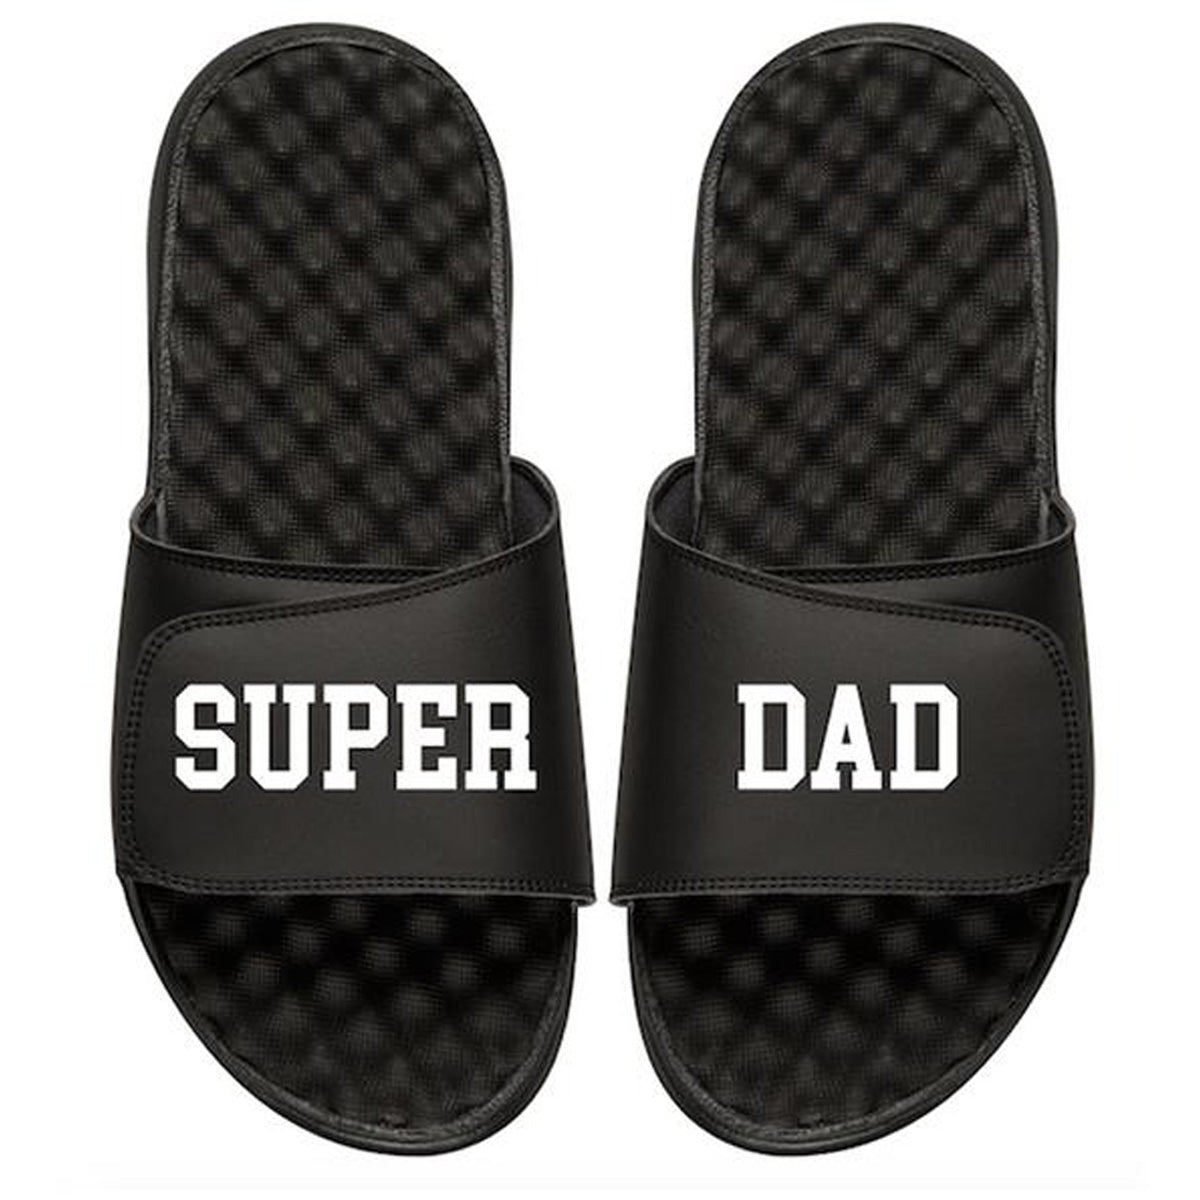 Super Dad - ISlide